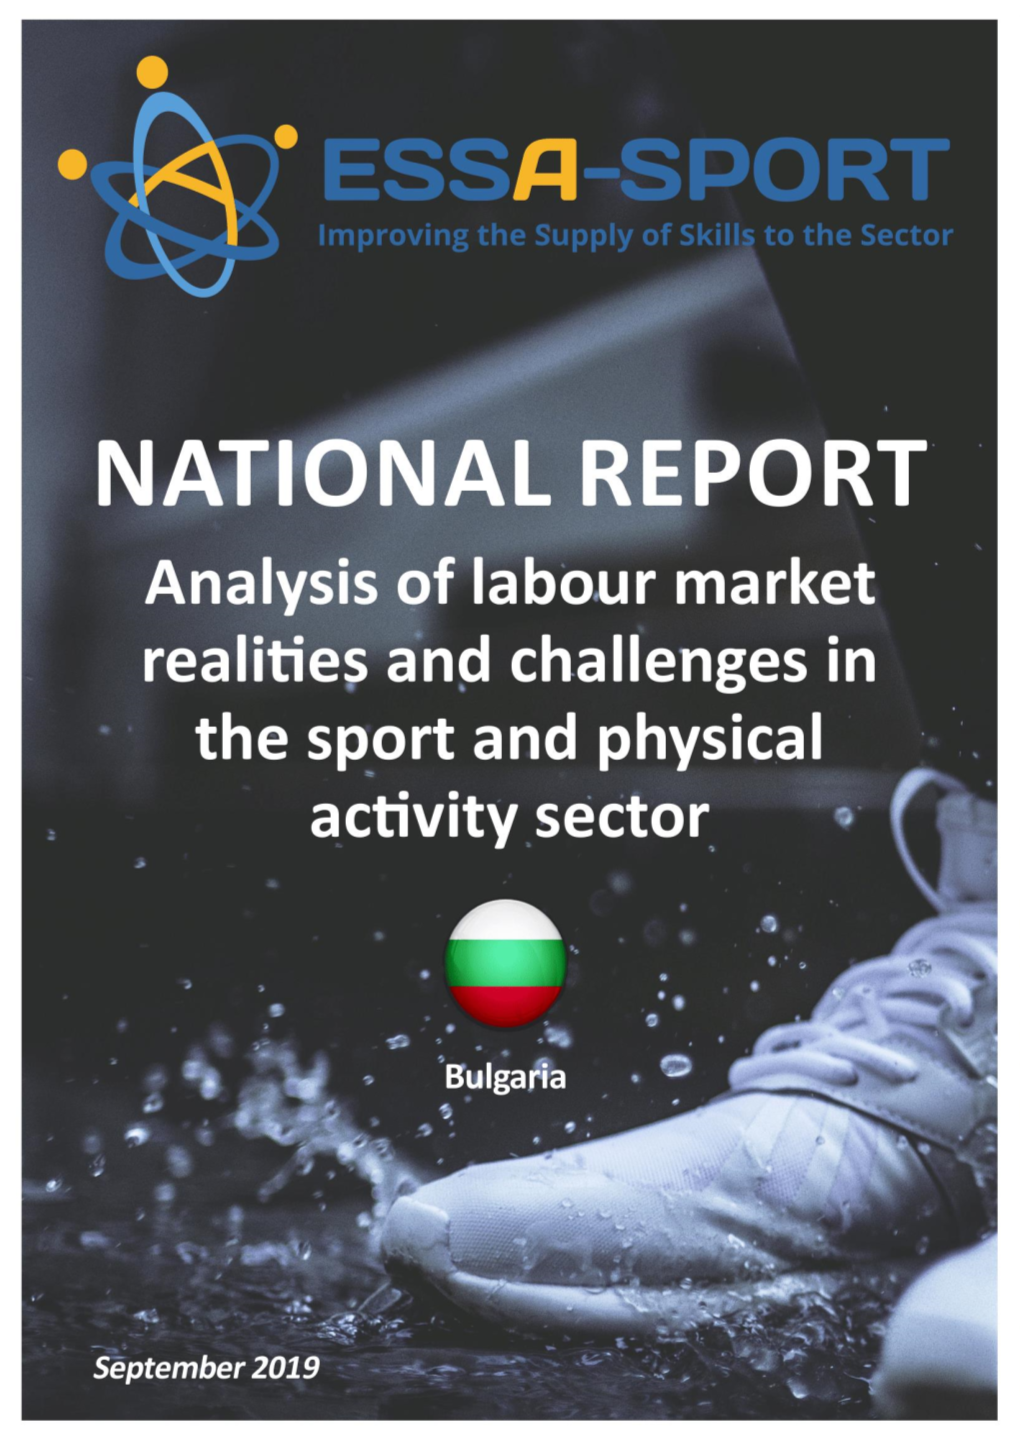 ESSA-Sport National Report – Bulgaria 1